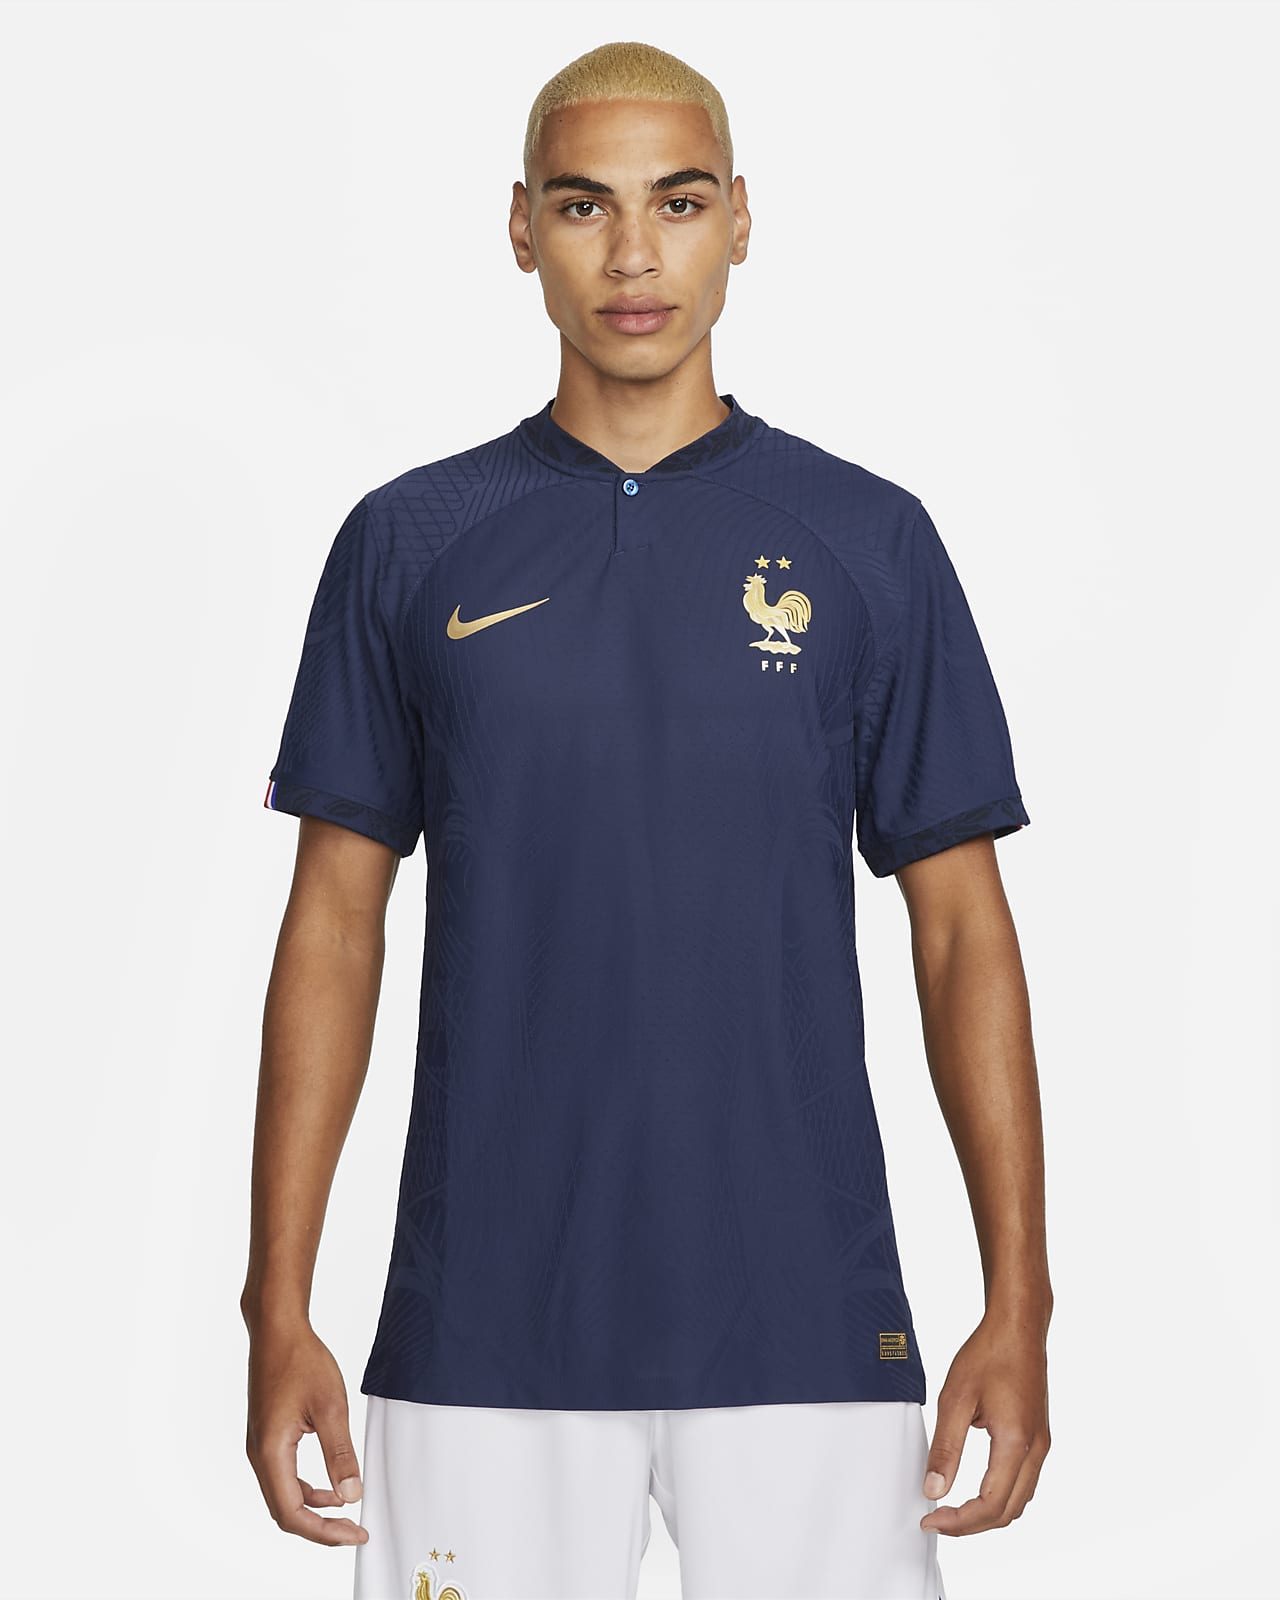 FFF 2022/23 Match Home Men's Nike Dri-FIT ADV Football Shirt